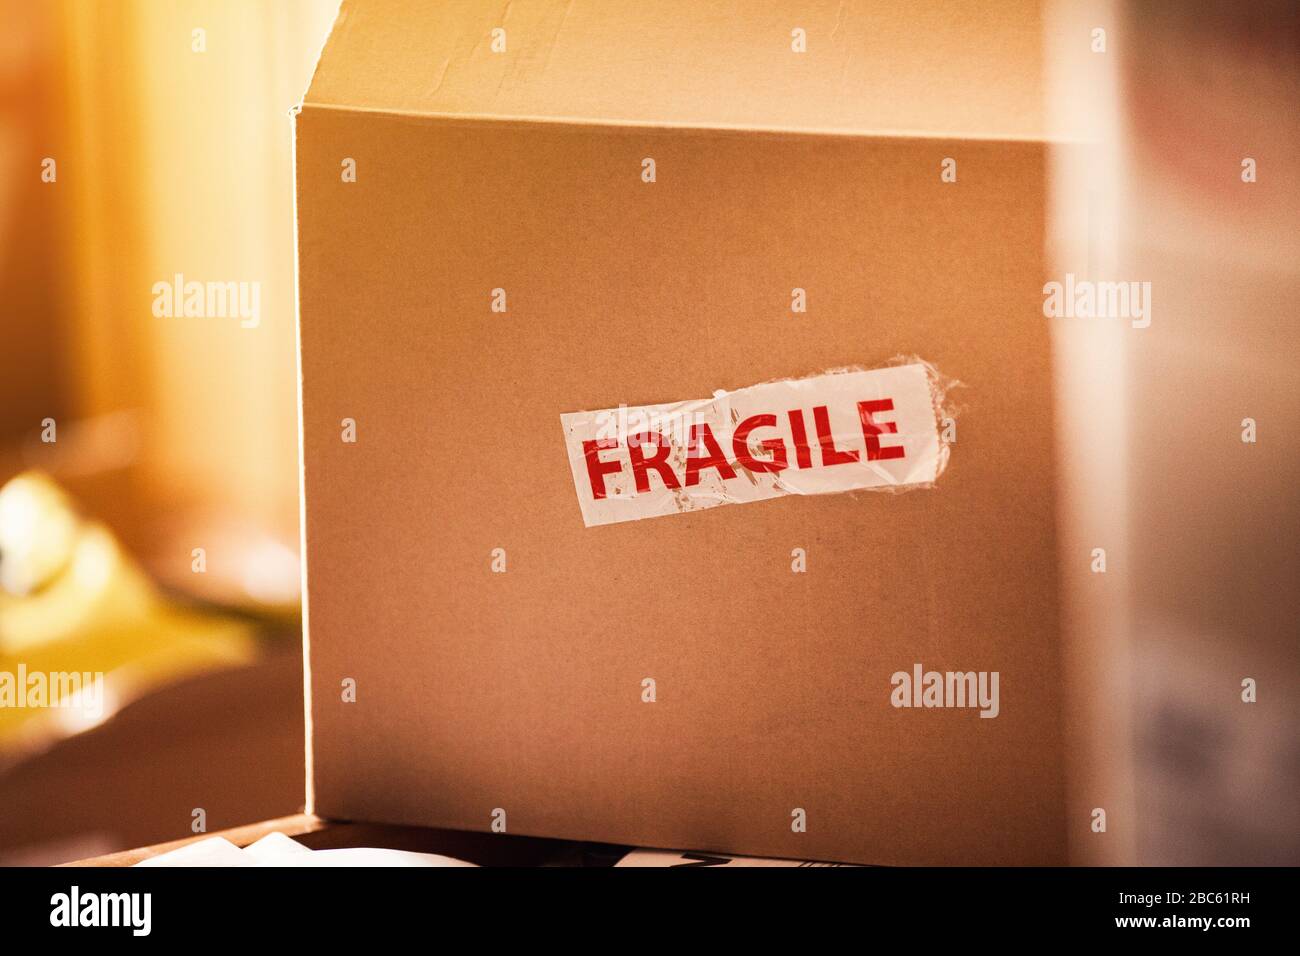 Fragile tape sticker on box Stock Photo